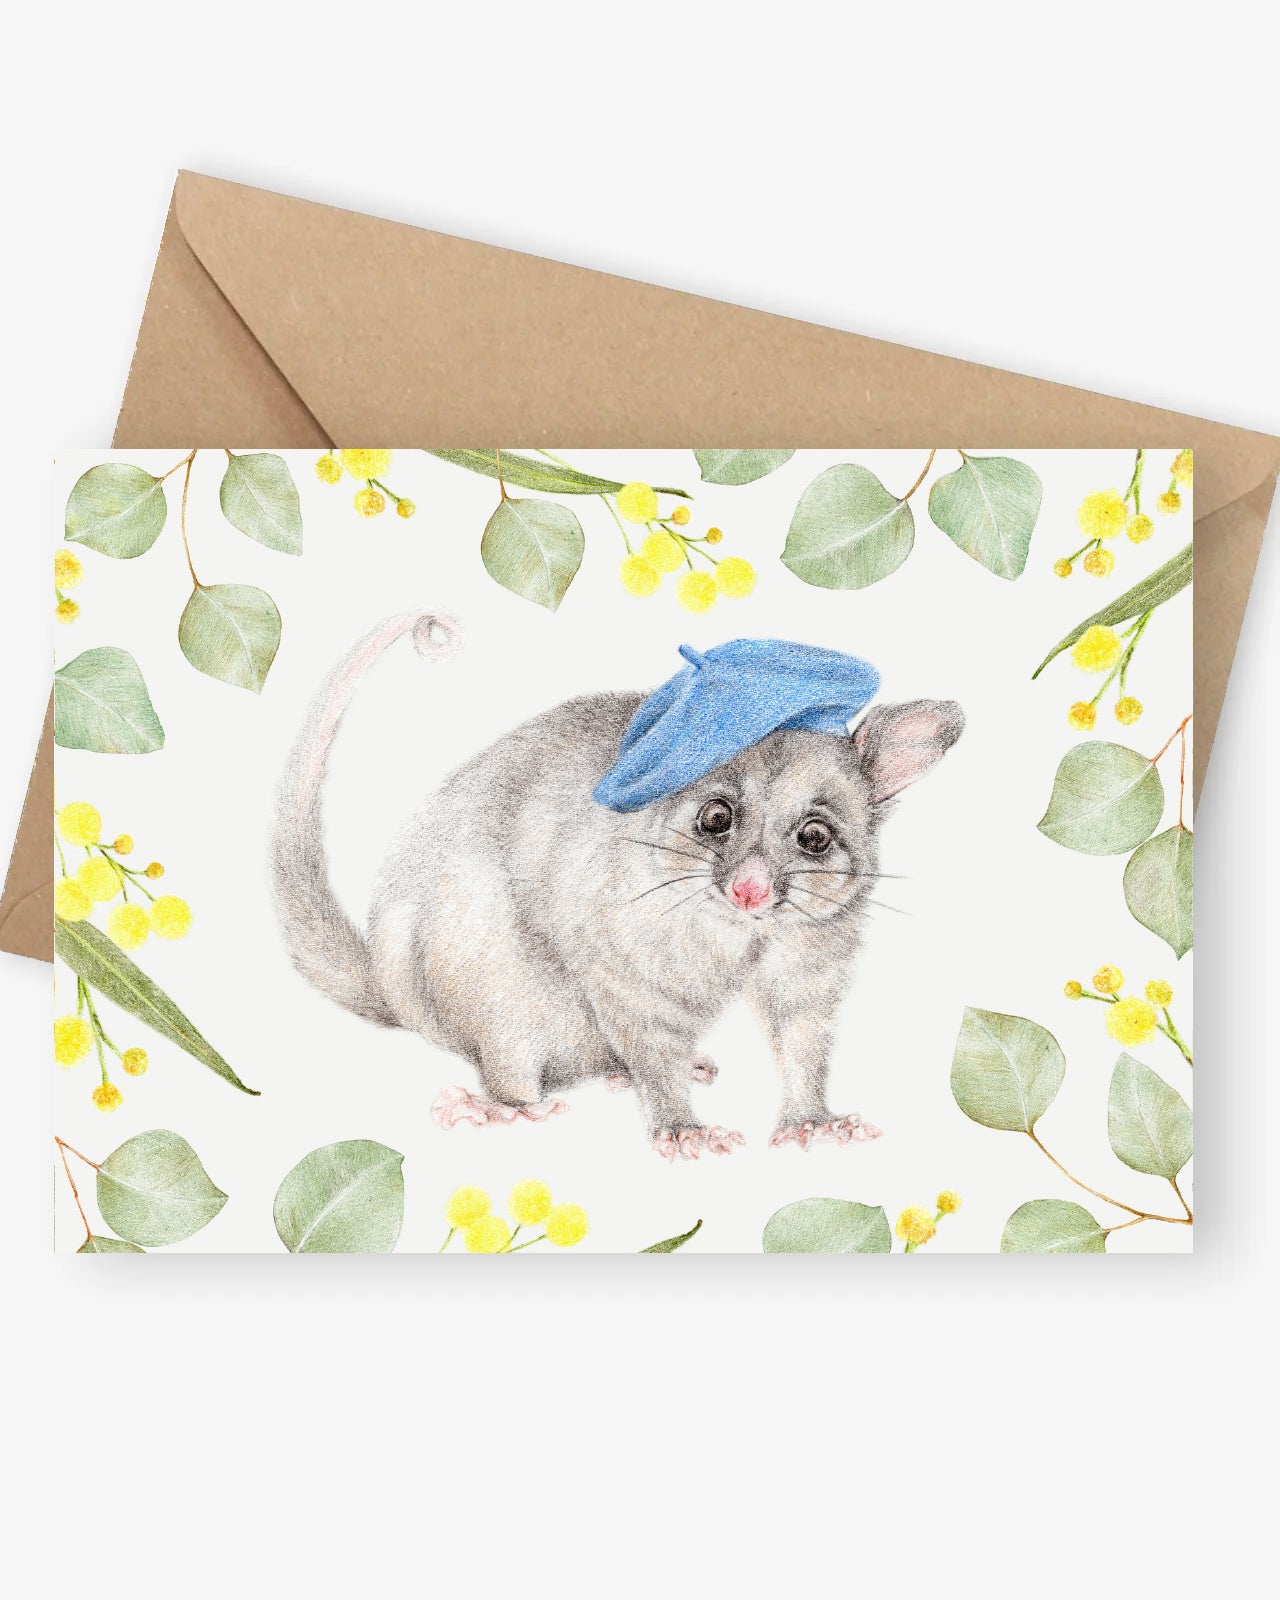 Best Dressed possum happy birthday card